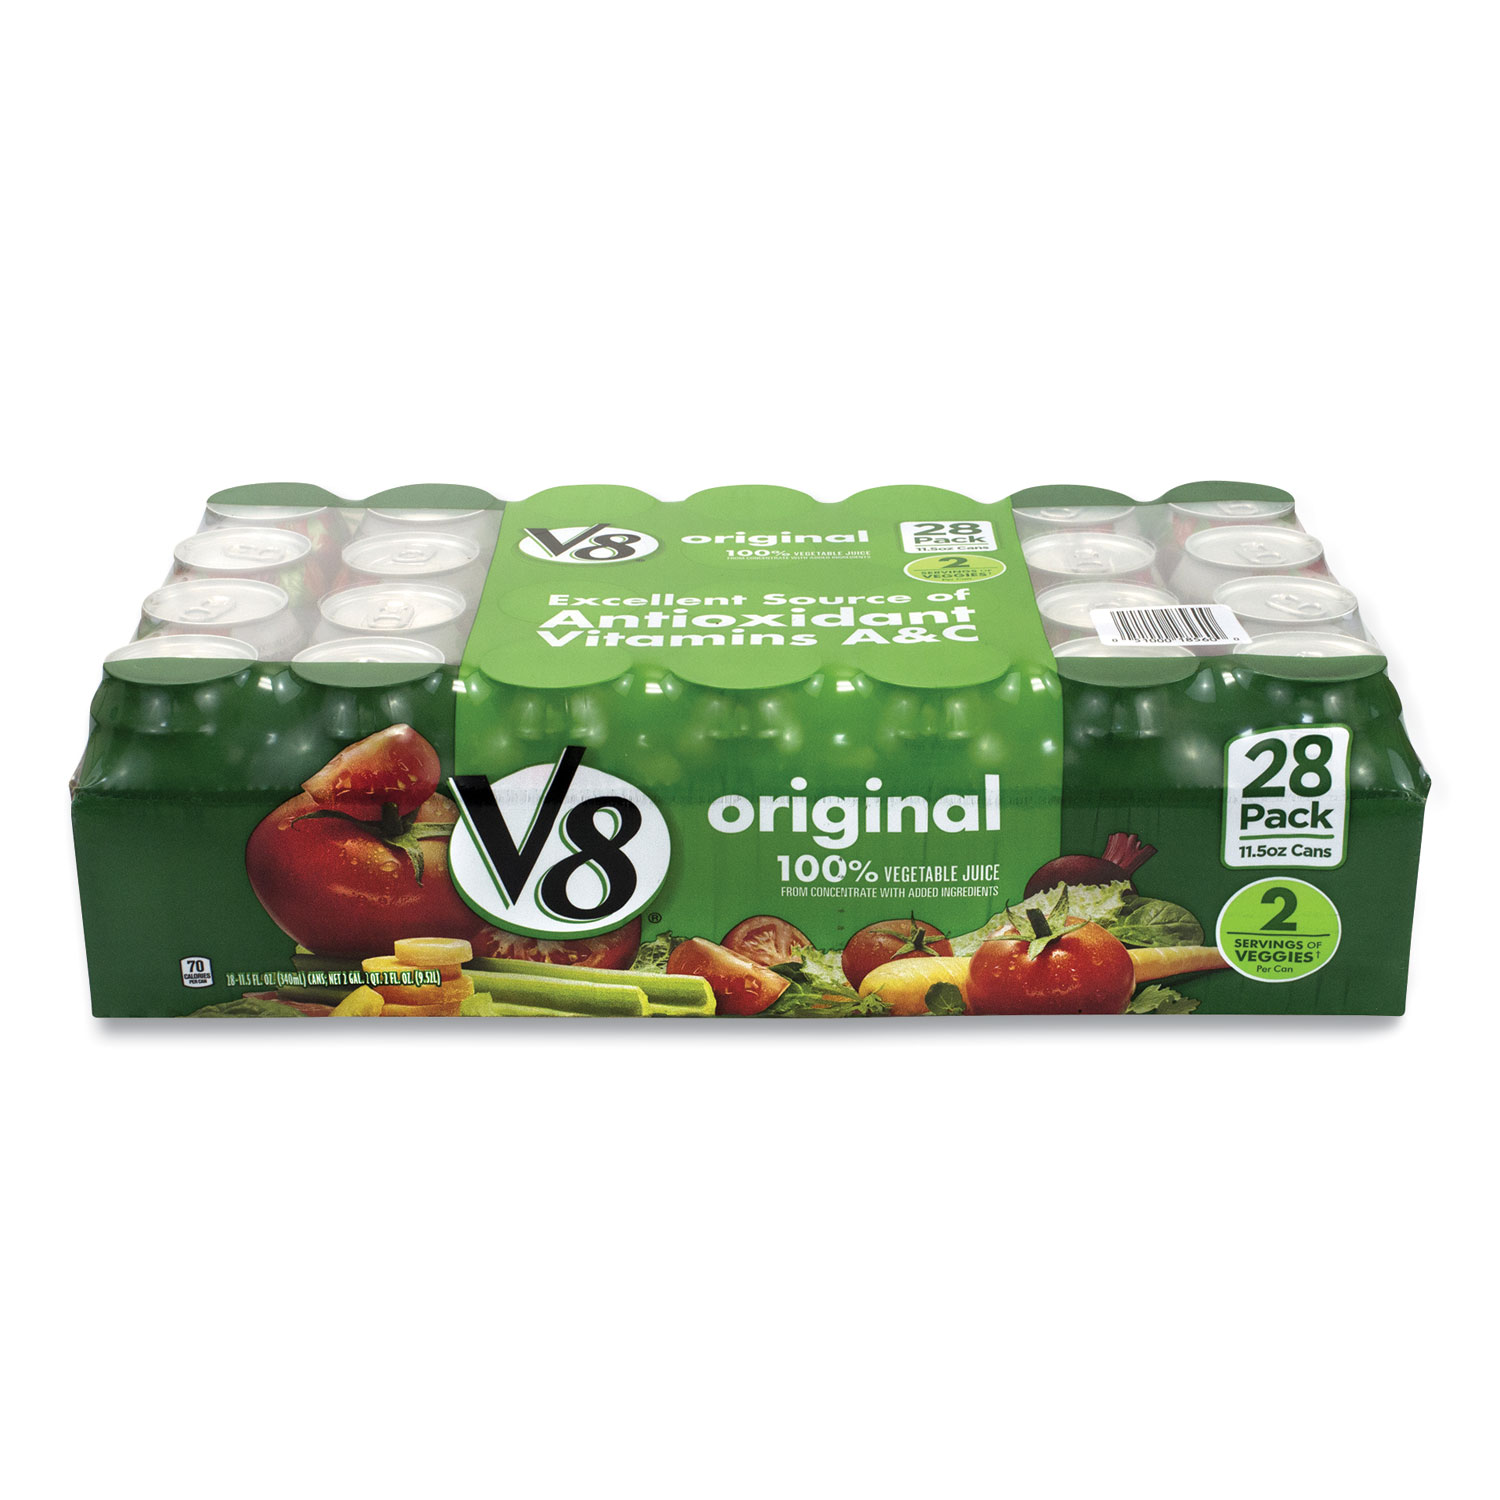  V-8 18560 Vegetable Juice, 11.5 oz Can, 28/Pack, Free Delivery in 1-4 Business Days (GRR90000092) 